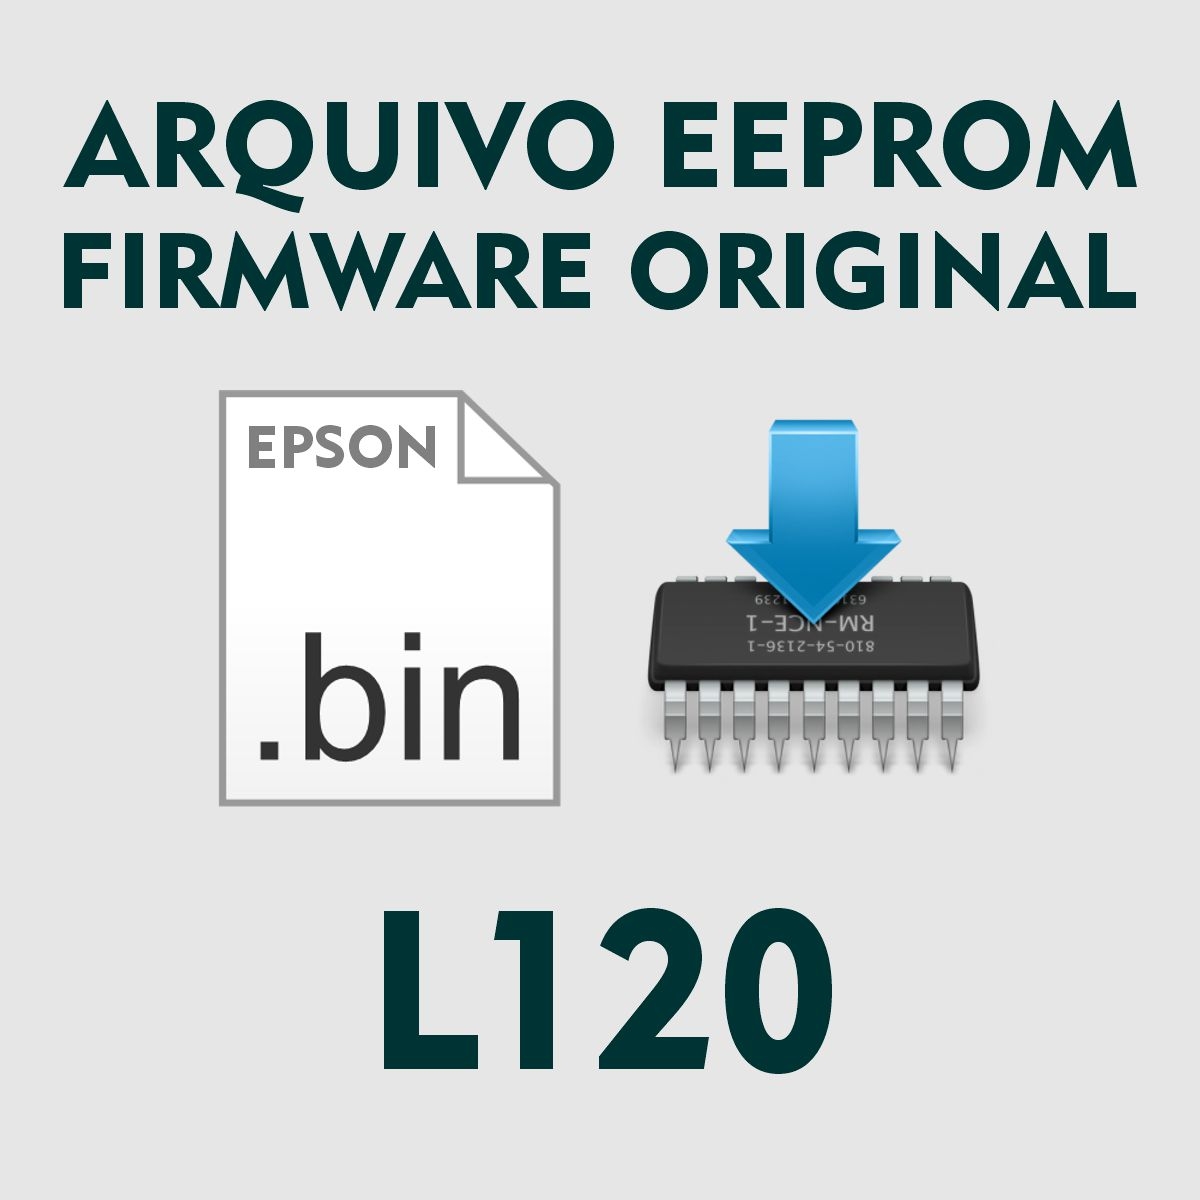 Epson L120 | Arquivo de Eeprom Firmware .bin - Original